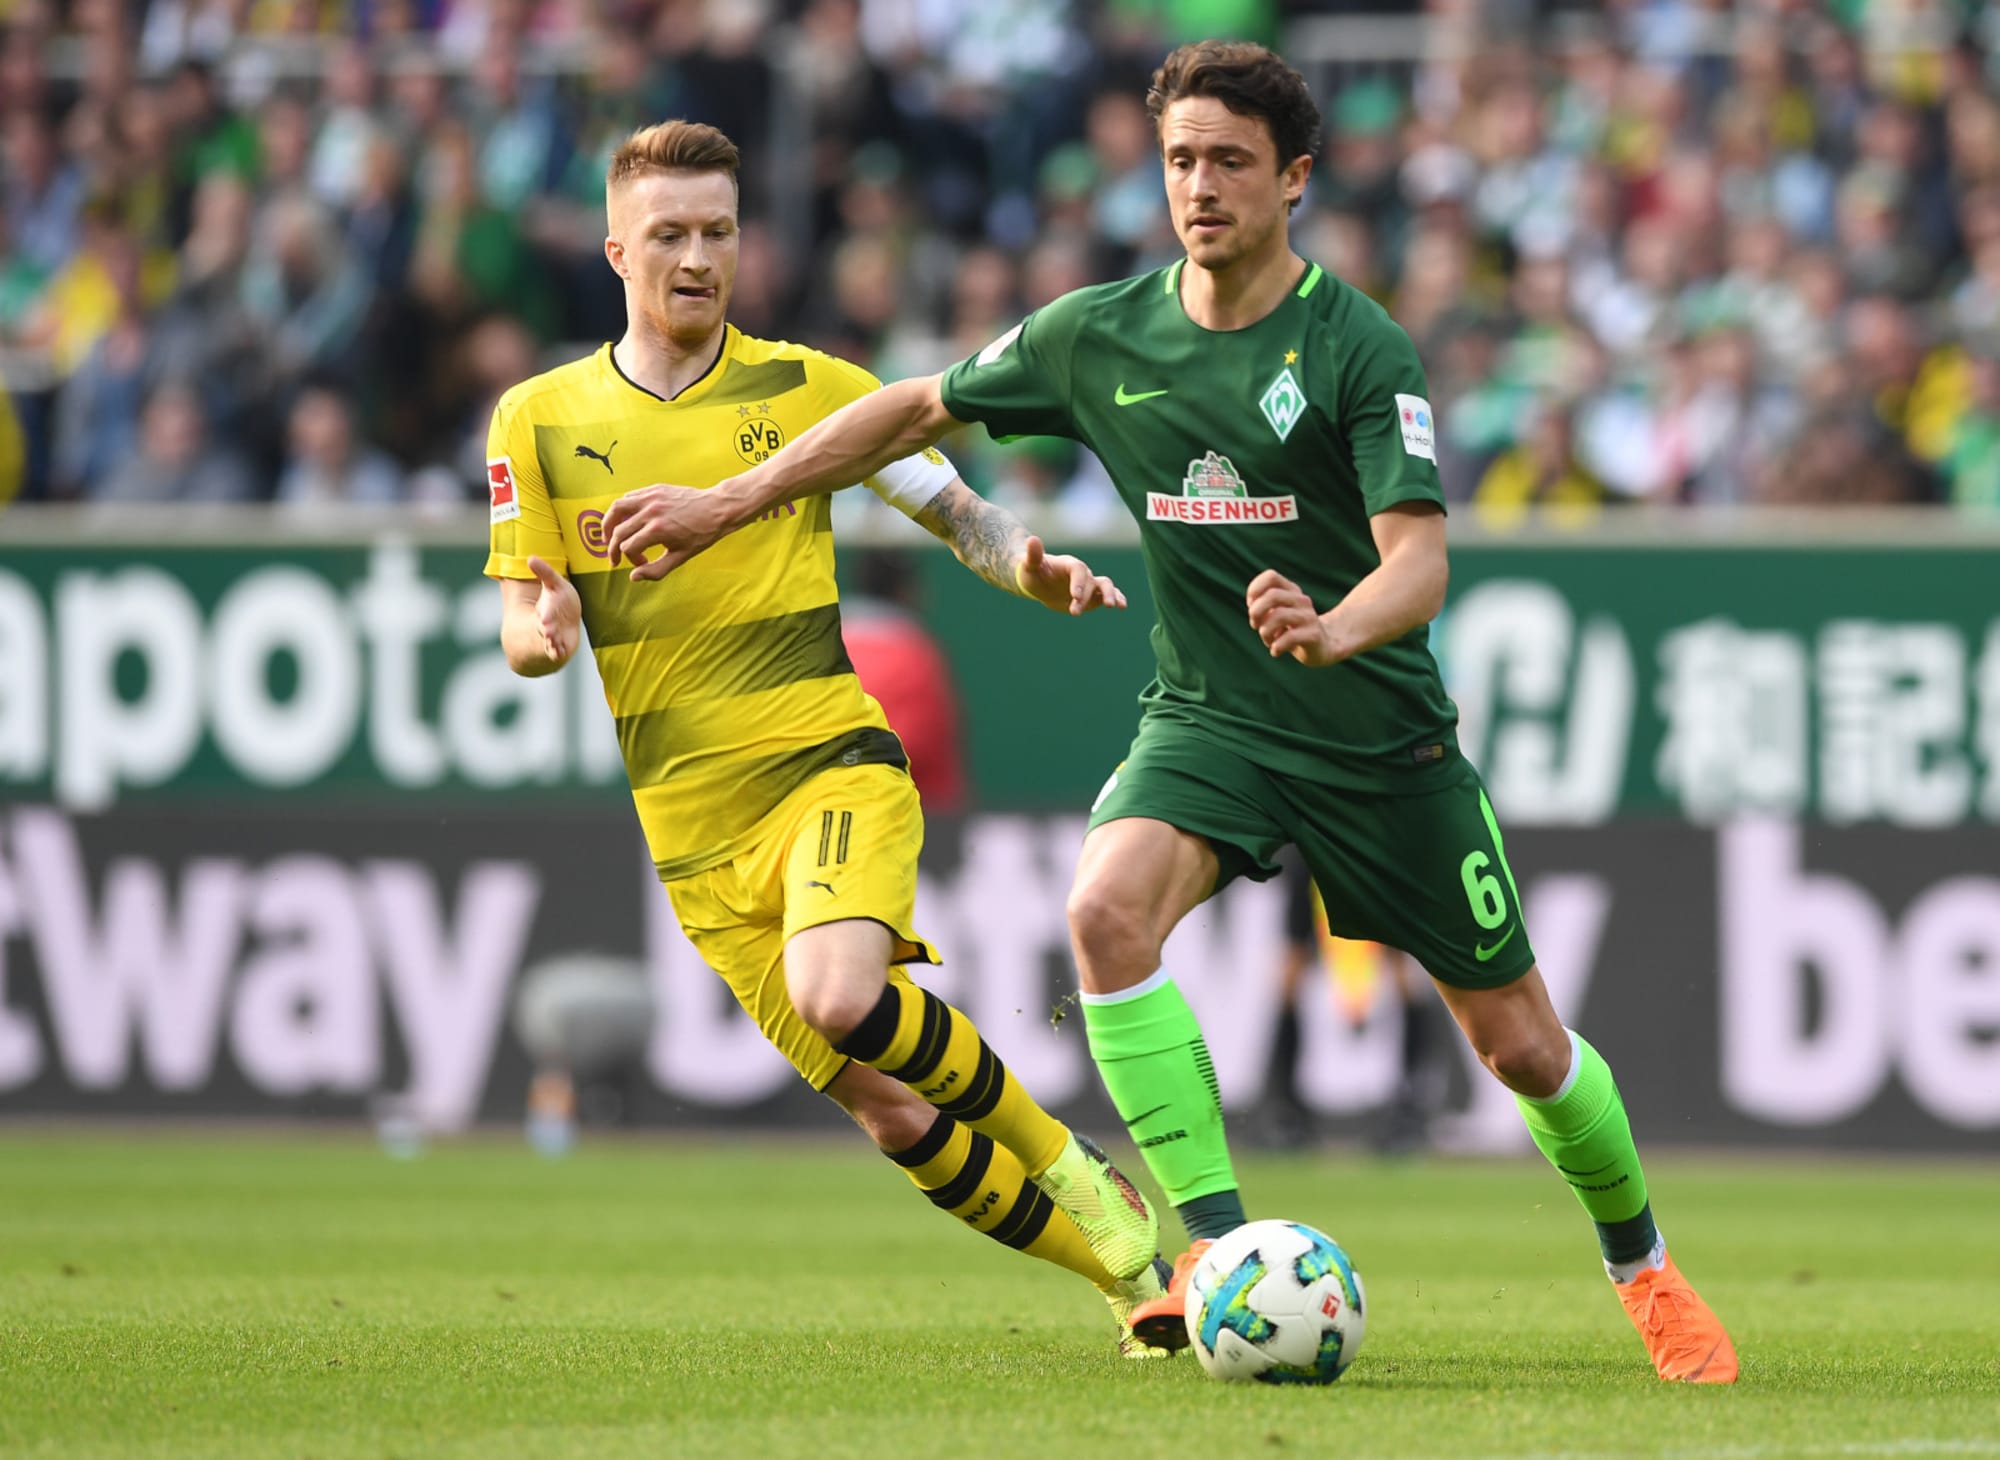 Borussia Dortmund vs Werder Bremen: Expected Starting XI - Page 2